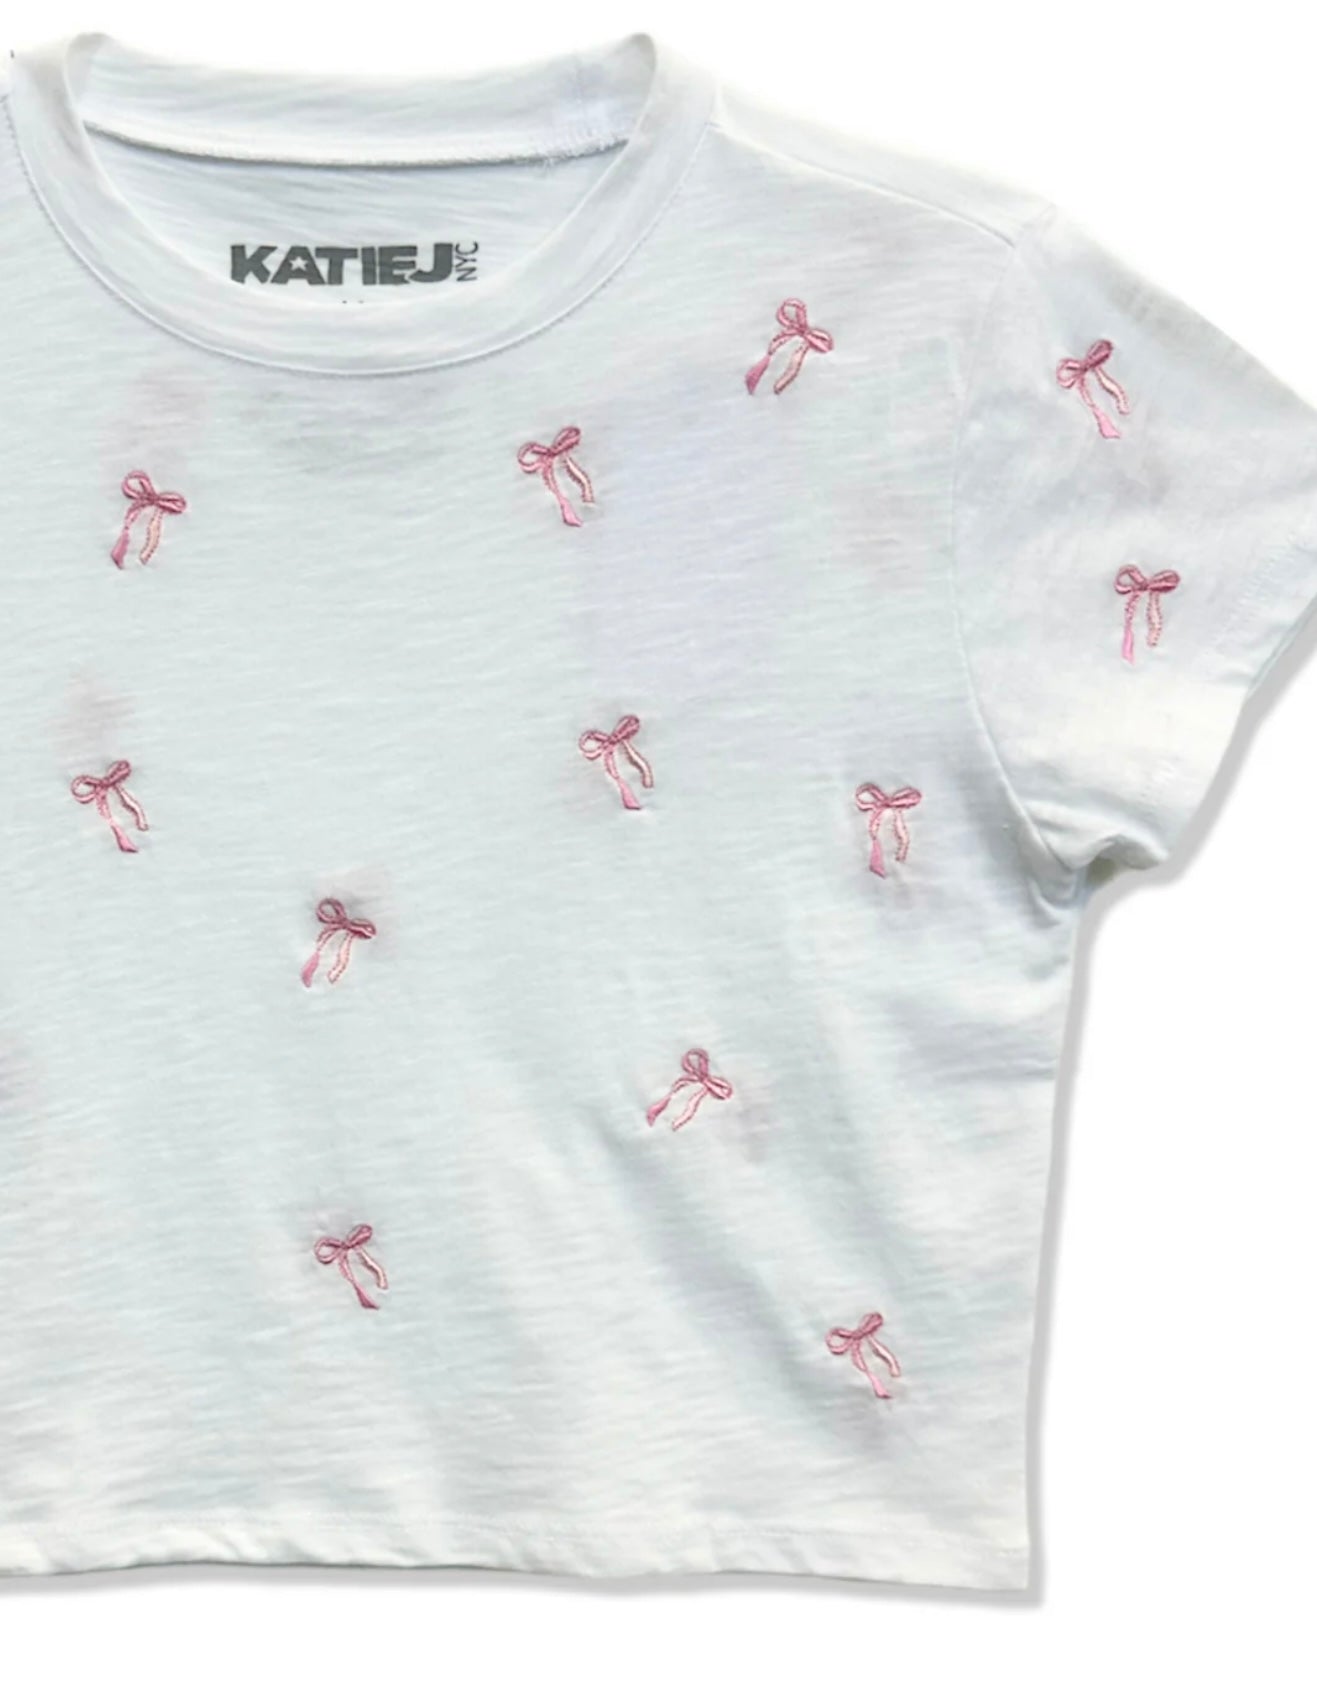 Katie J NYC Girls Tween Fearless Embroidered Bow Crop Tee